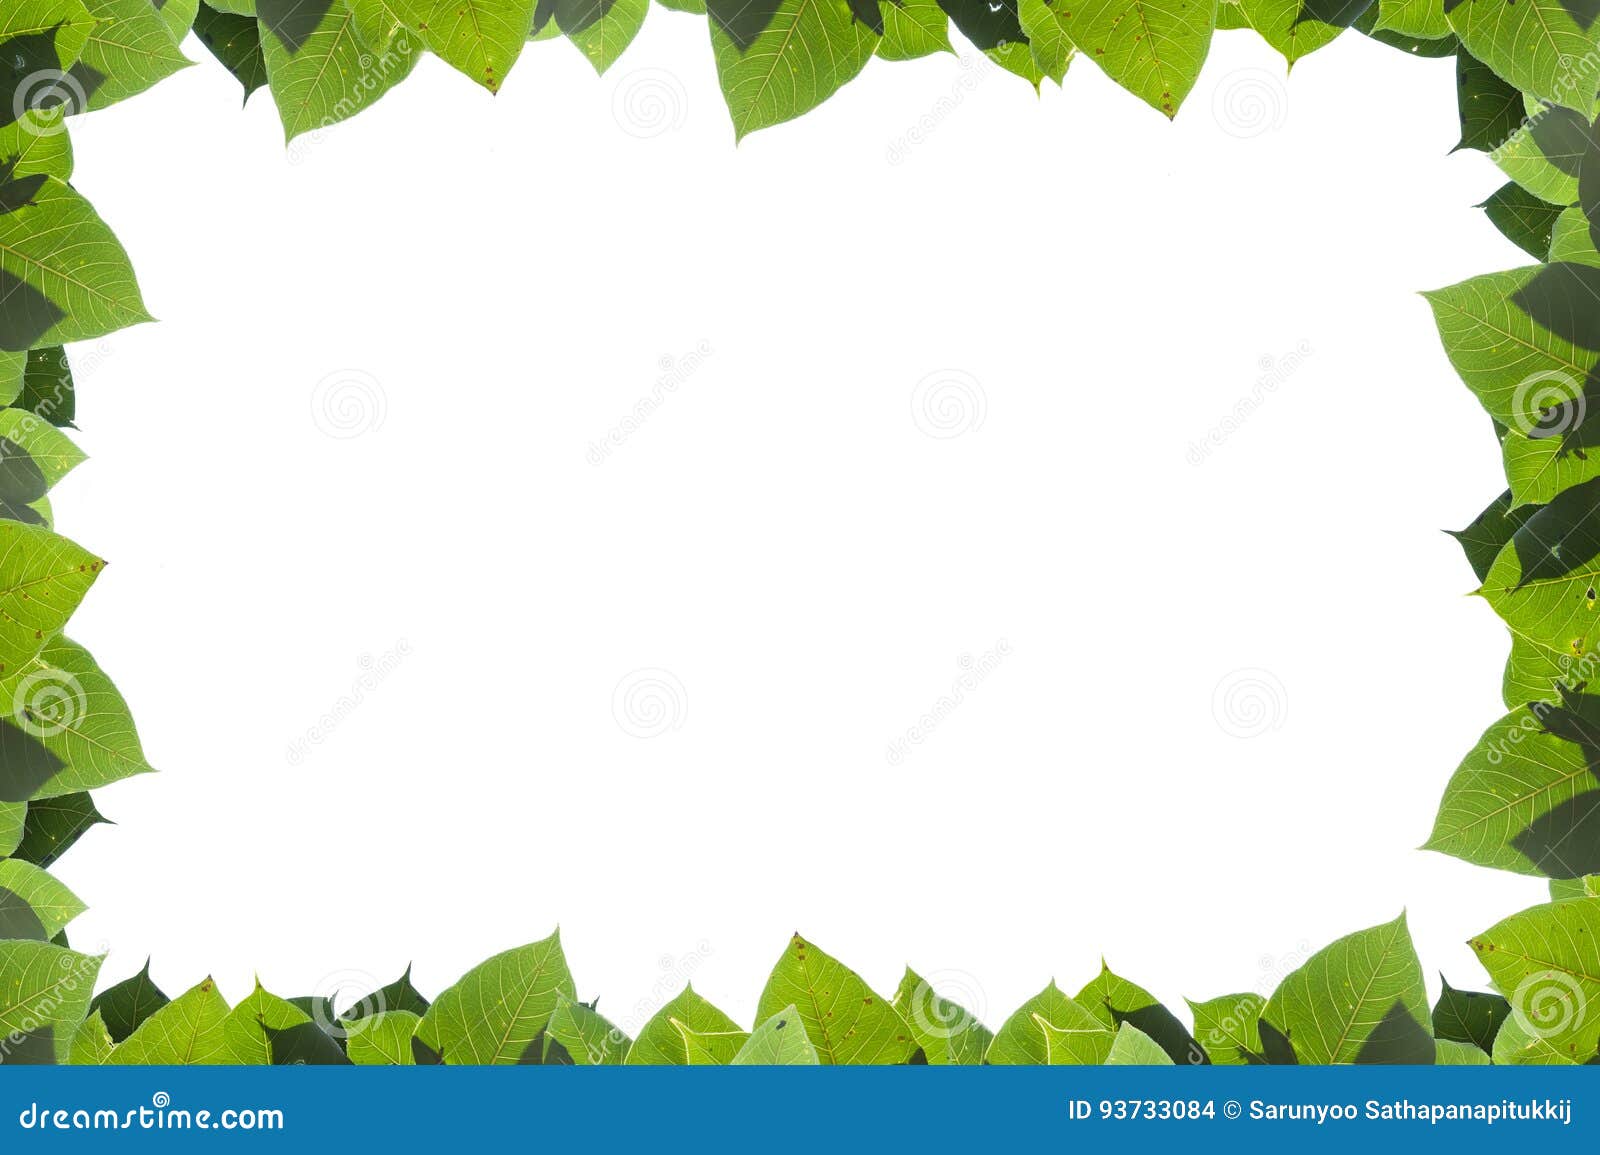 Green Leaves Frame Isolated on White Background Stock Illustration ...